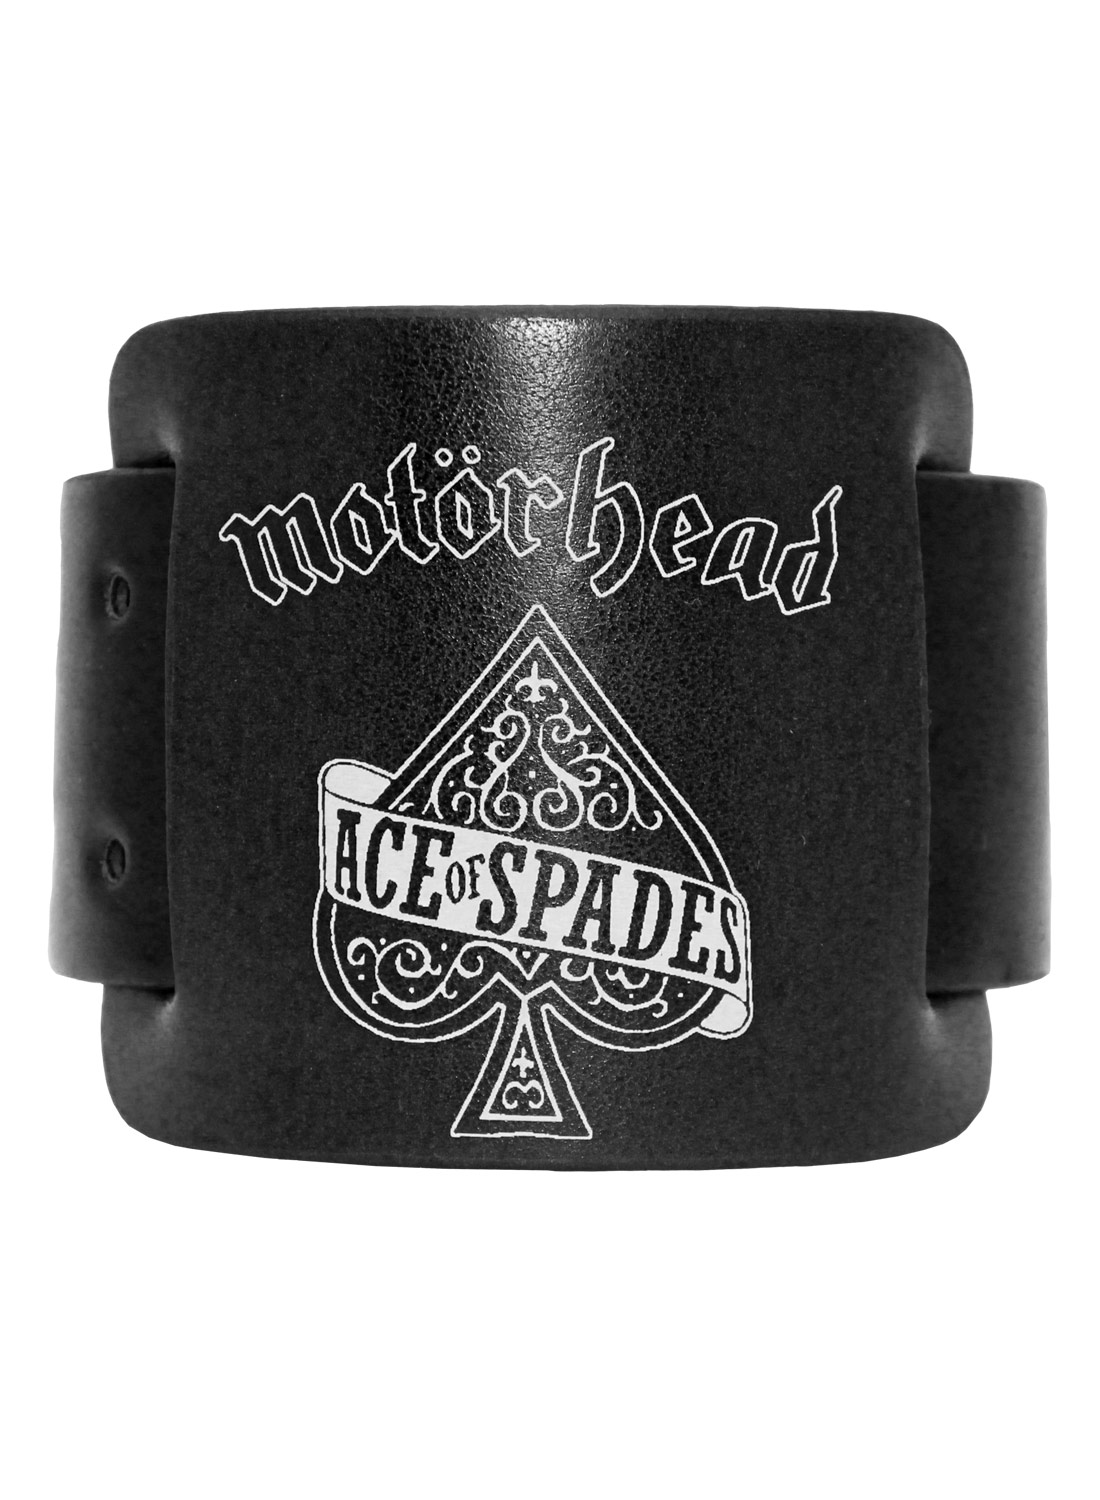 Motörhead Ace Leather Wristband